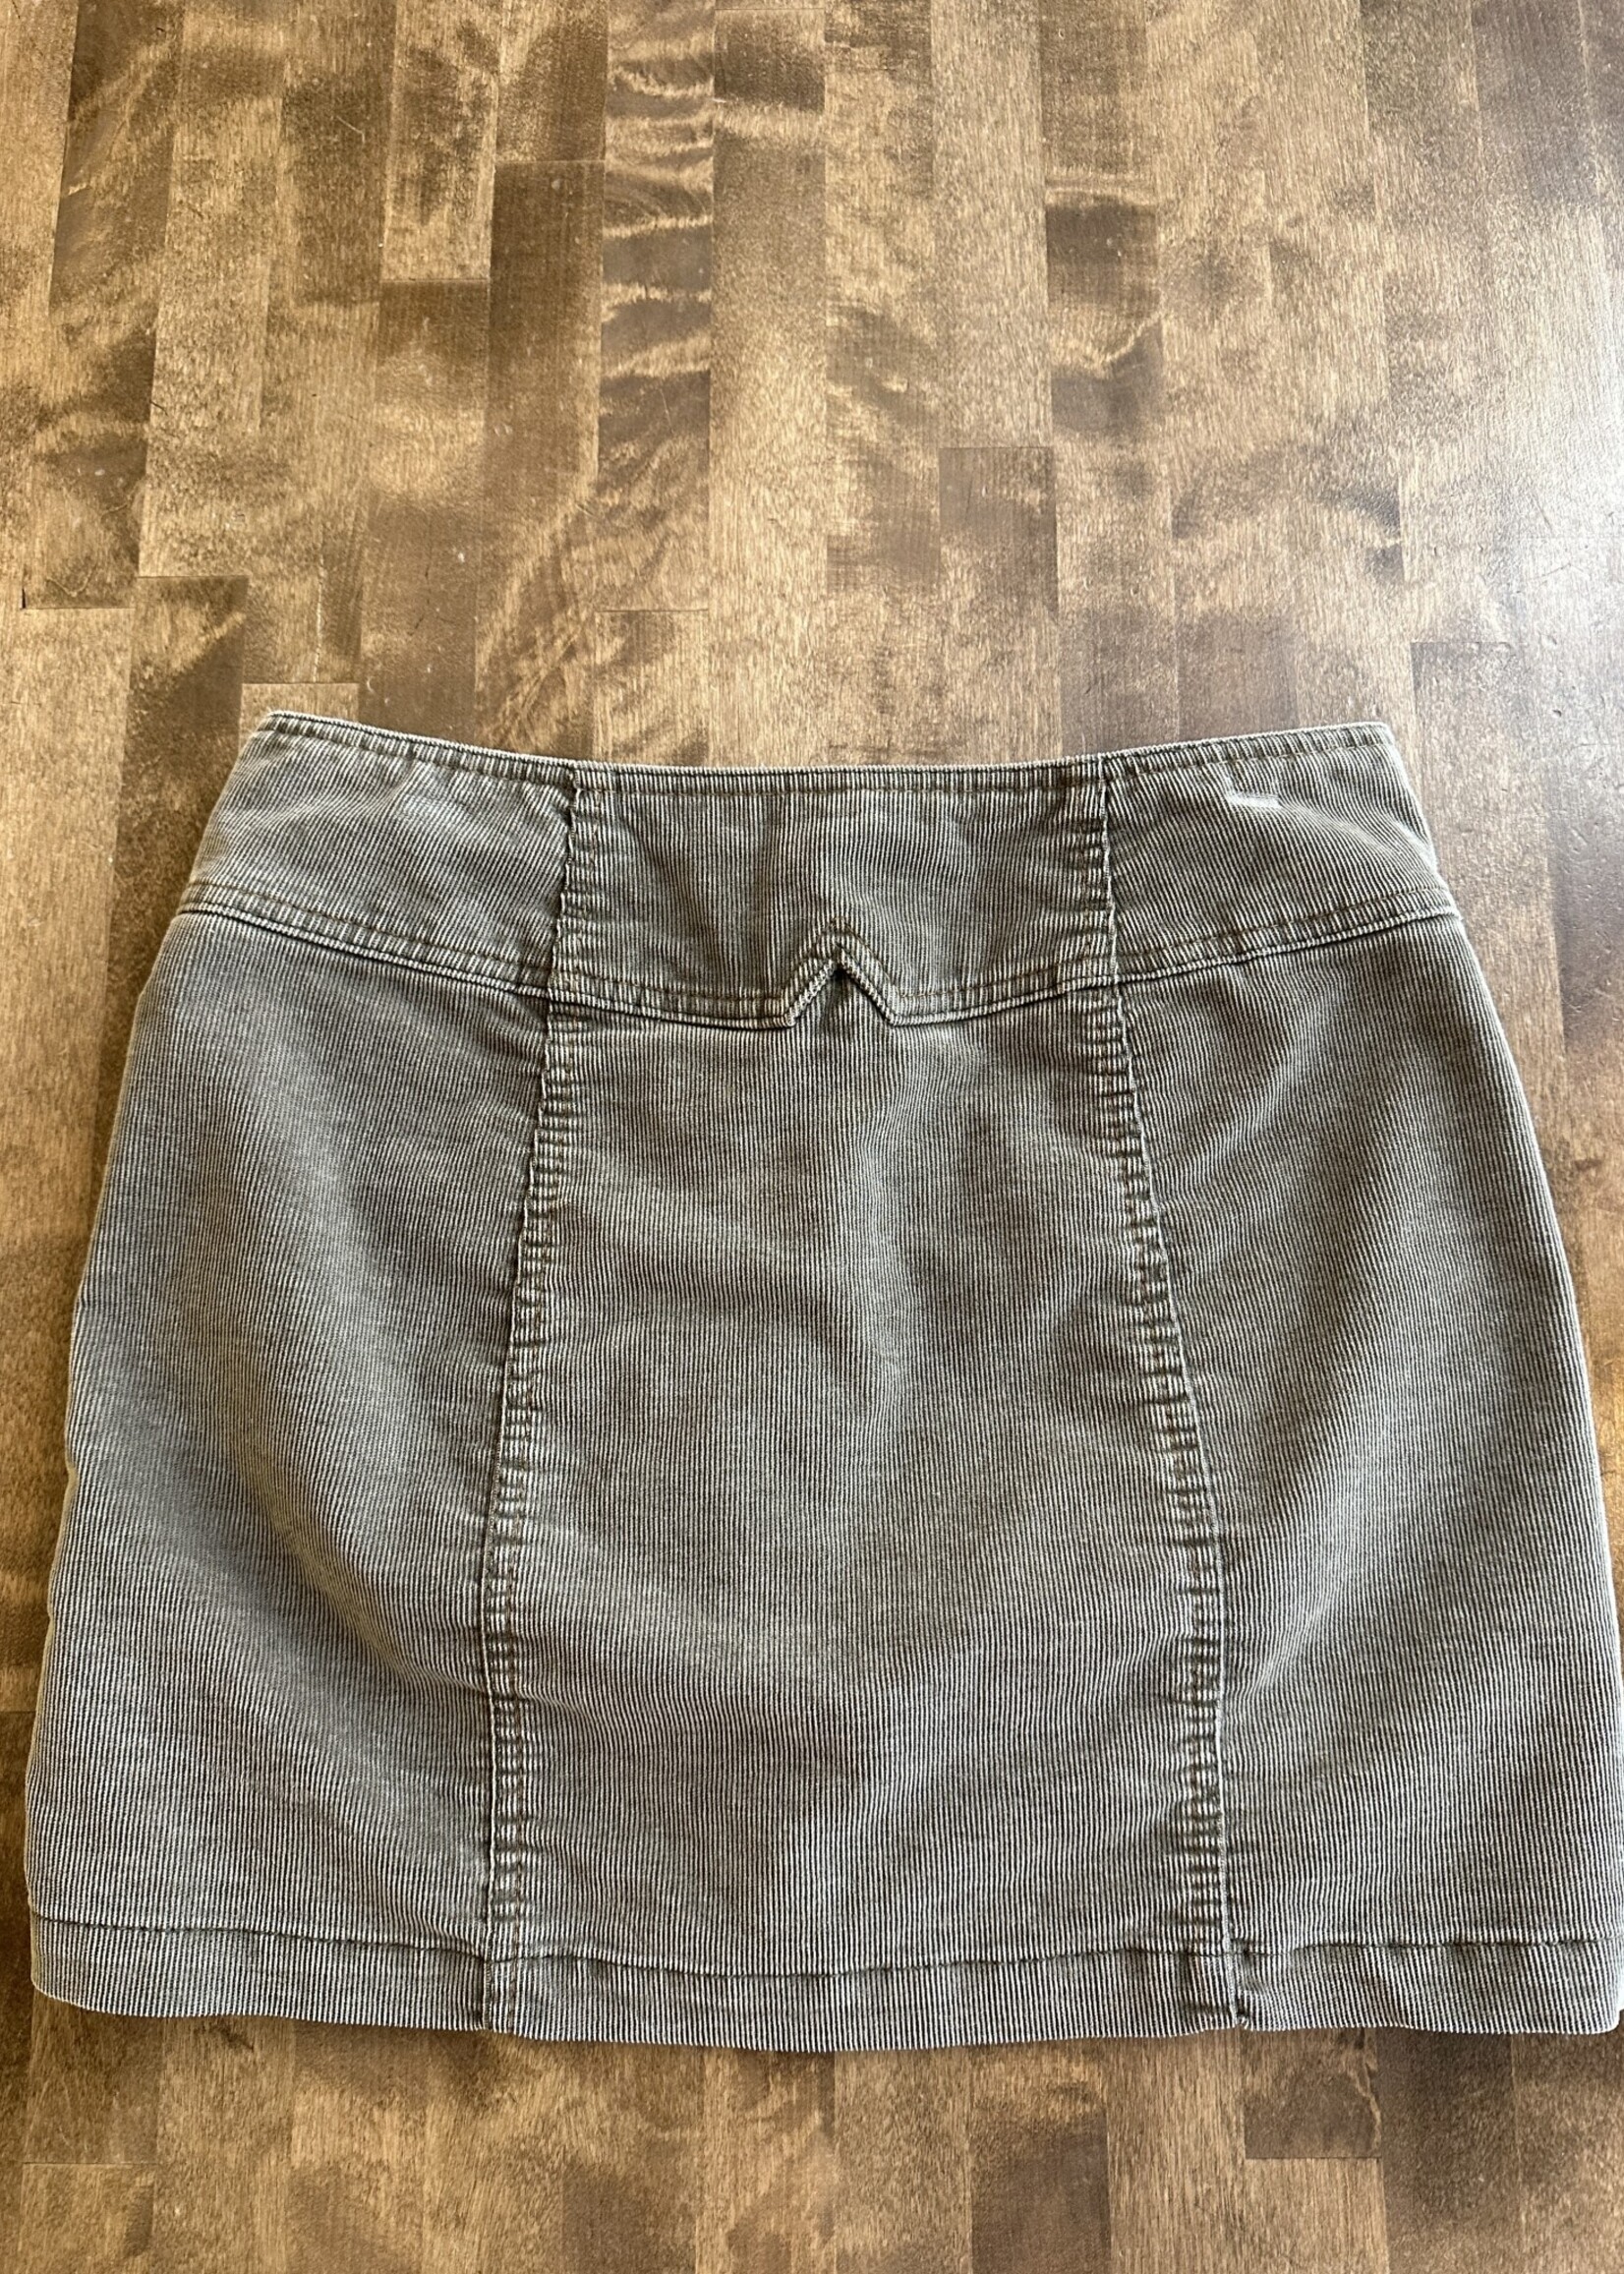 Gap Y2K Grey Corduroy Button Skirt 29 S